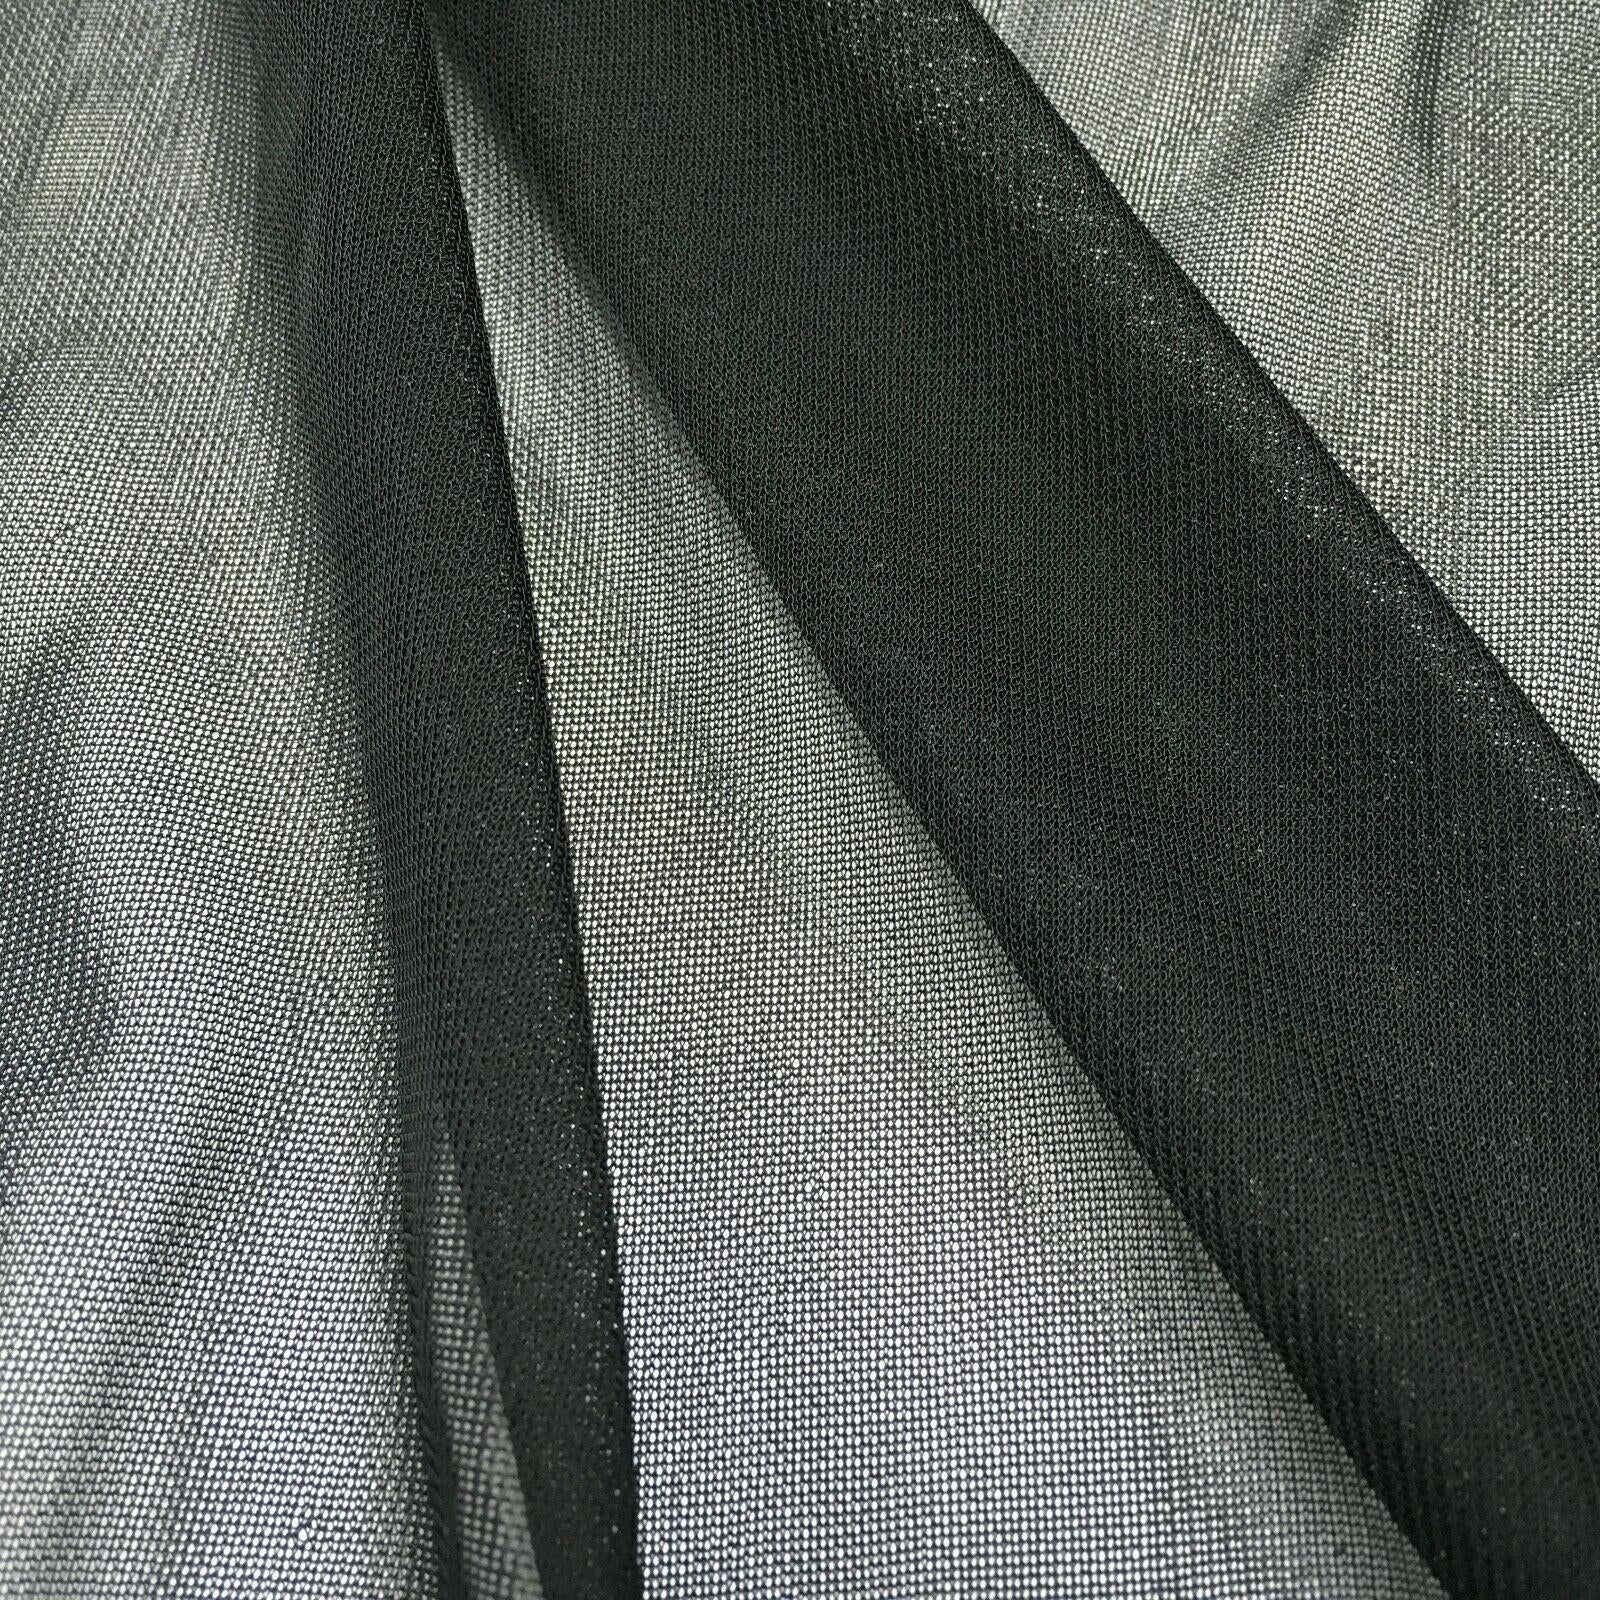 Plain Black 2 way stretch Net mesh Fabric 147cm M720-65 Mtex